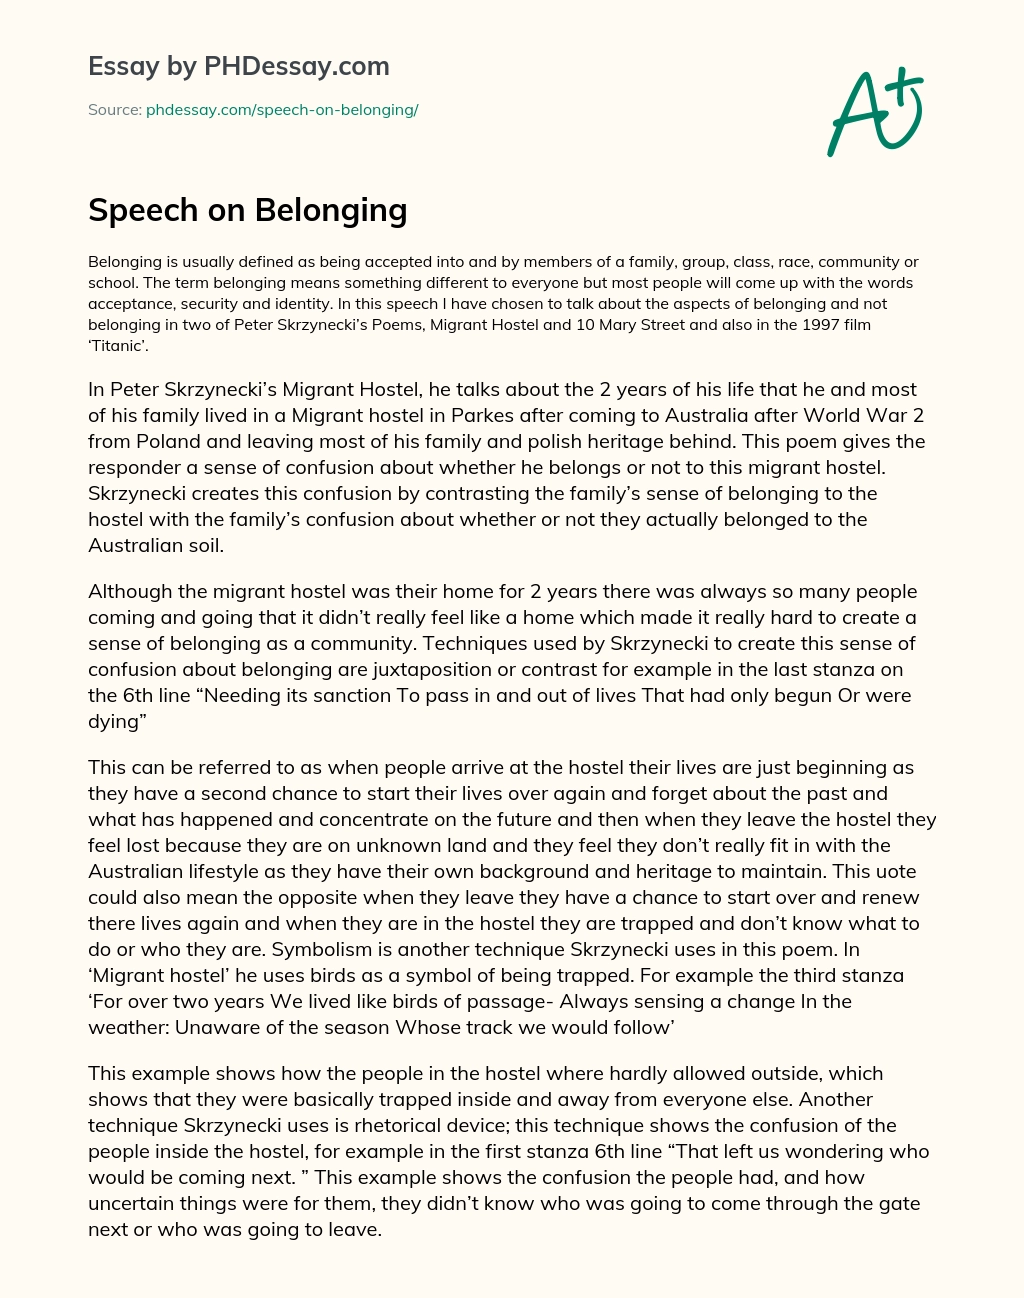 Speech on Belonging essay